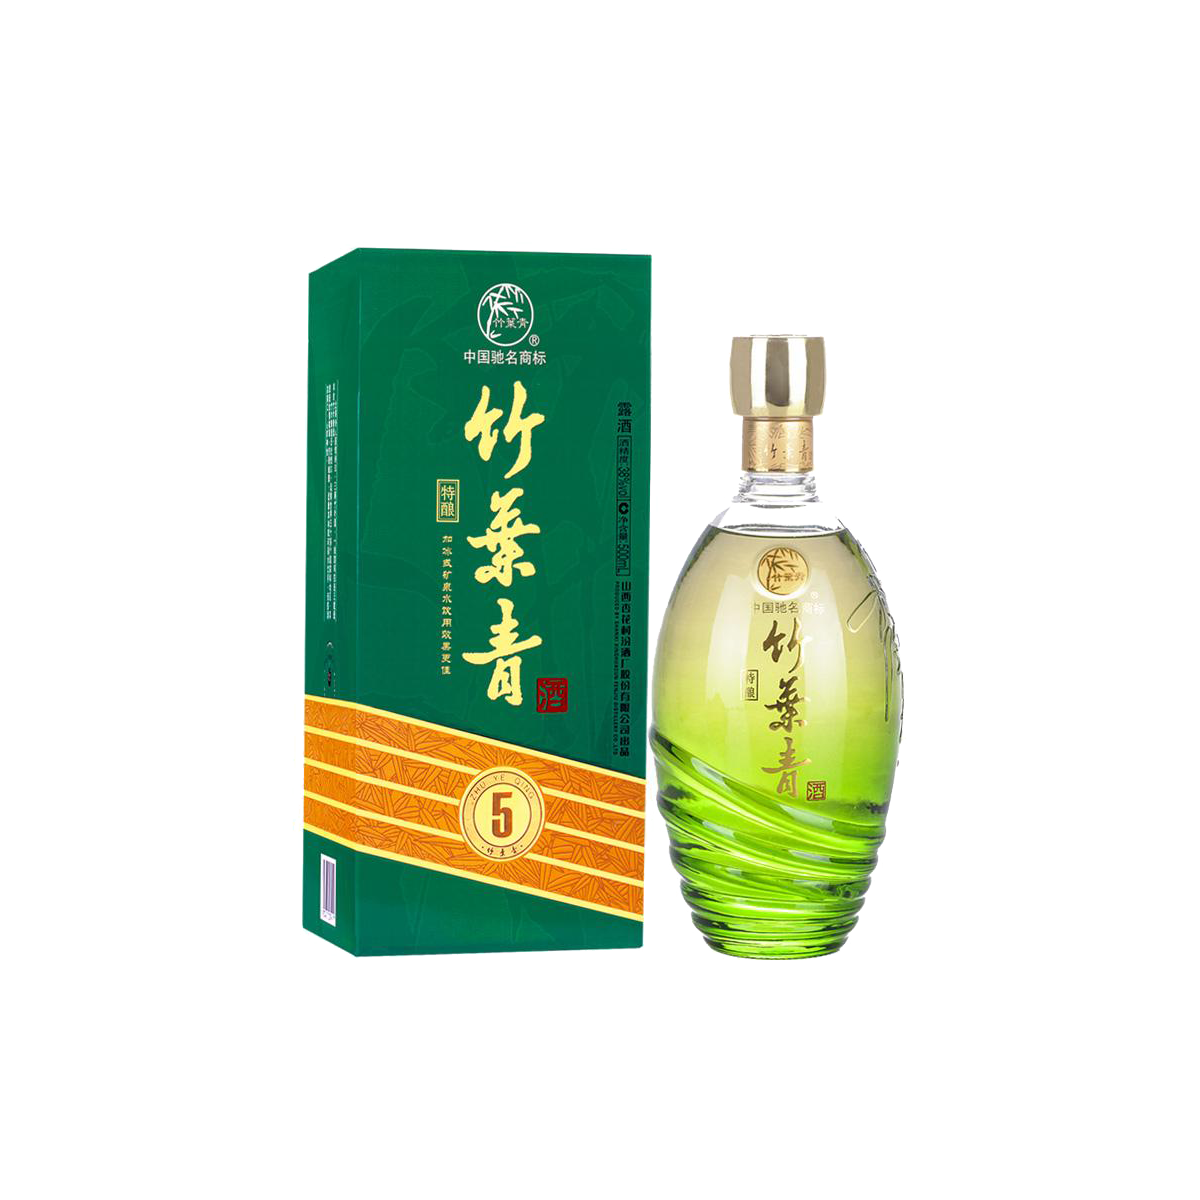 Bamboo Green 5 Baijiu 38 %